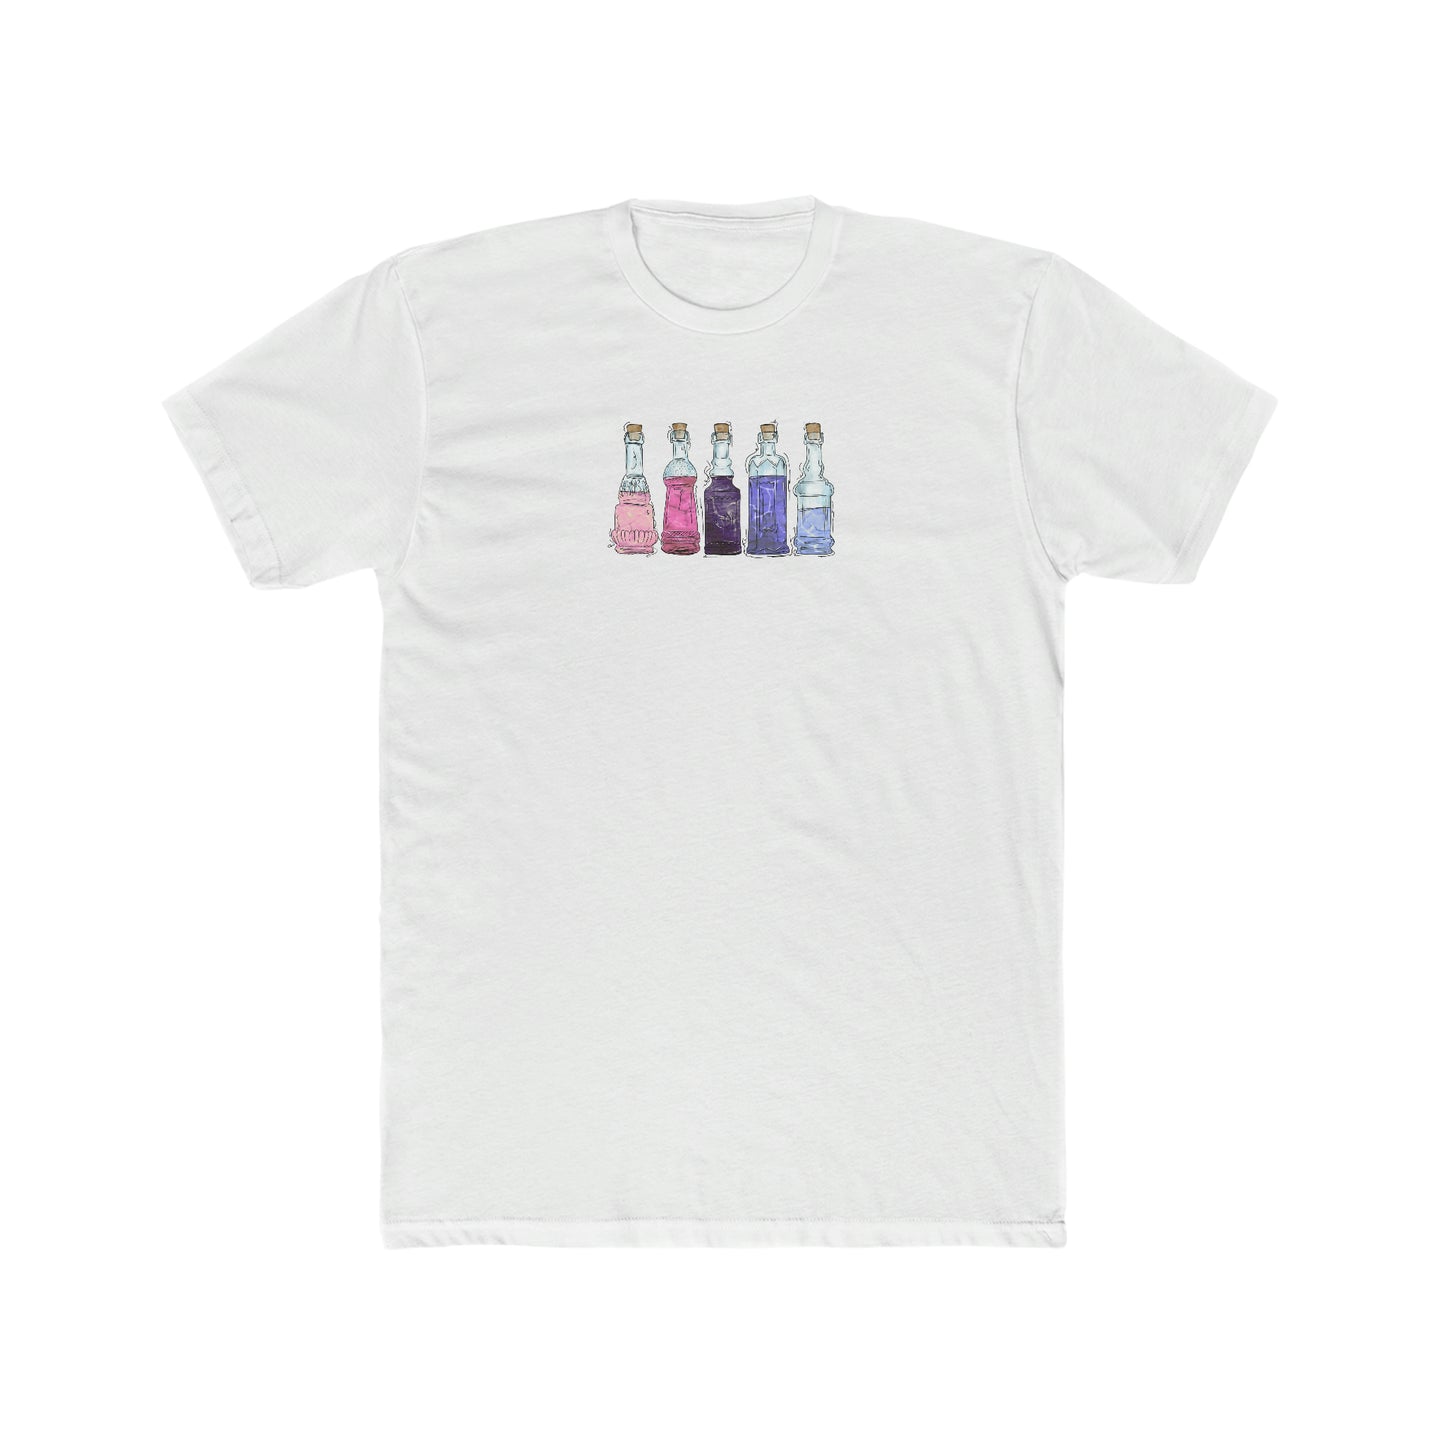 Omnisexual Pride Potion Bottles - Men's T-Shirt